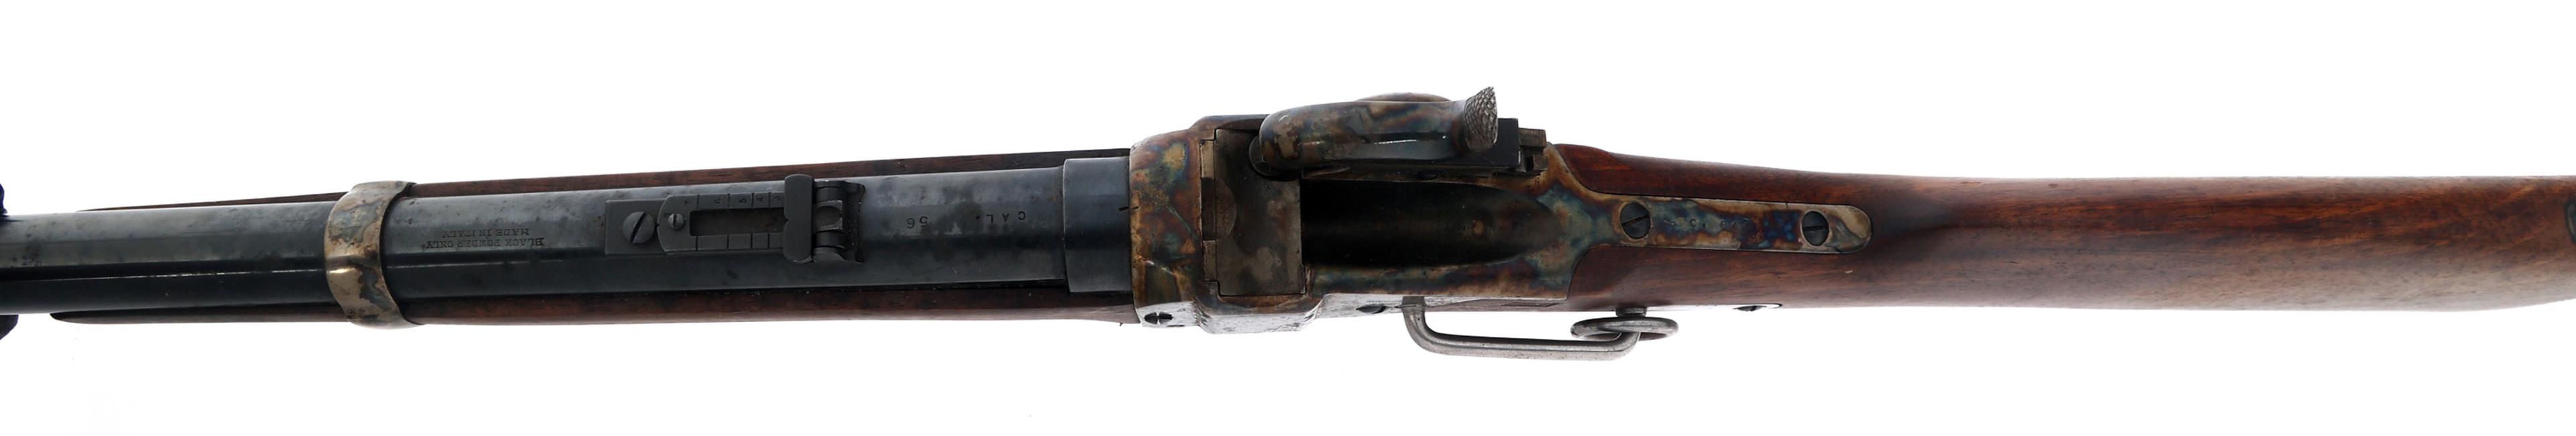 GARRETT ARMS MODEL 1863 .56 CALIBER RIFLE